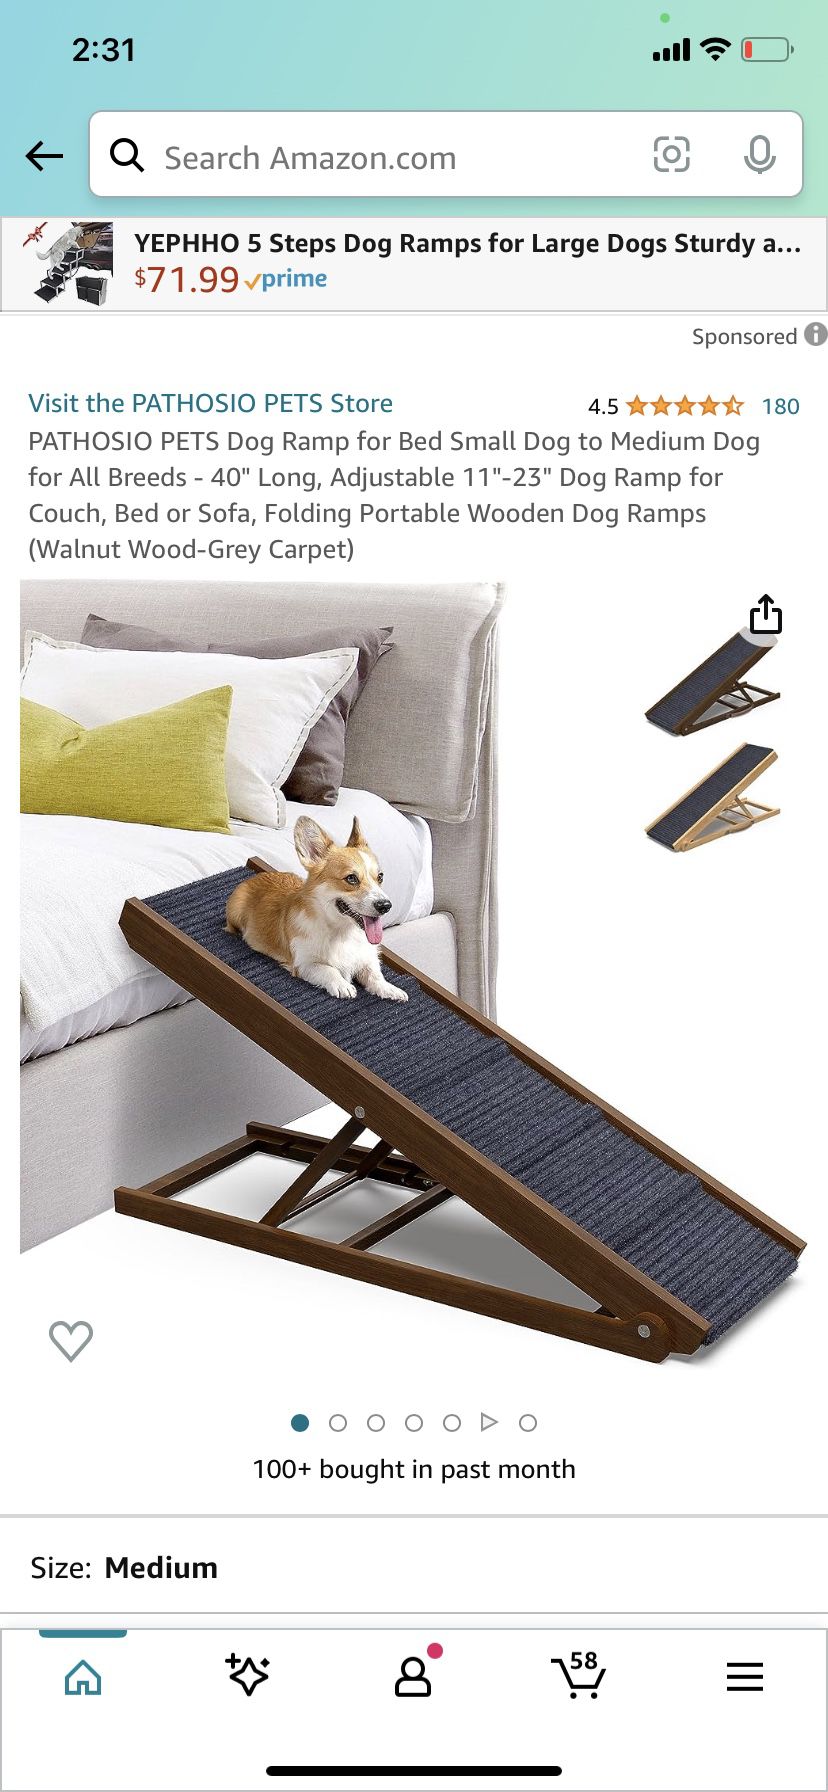 PATHOSIO PETS Dog Ramp for Bed